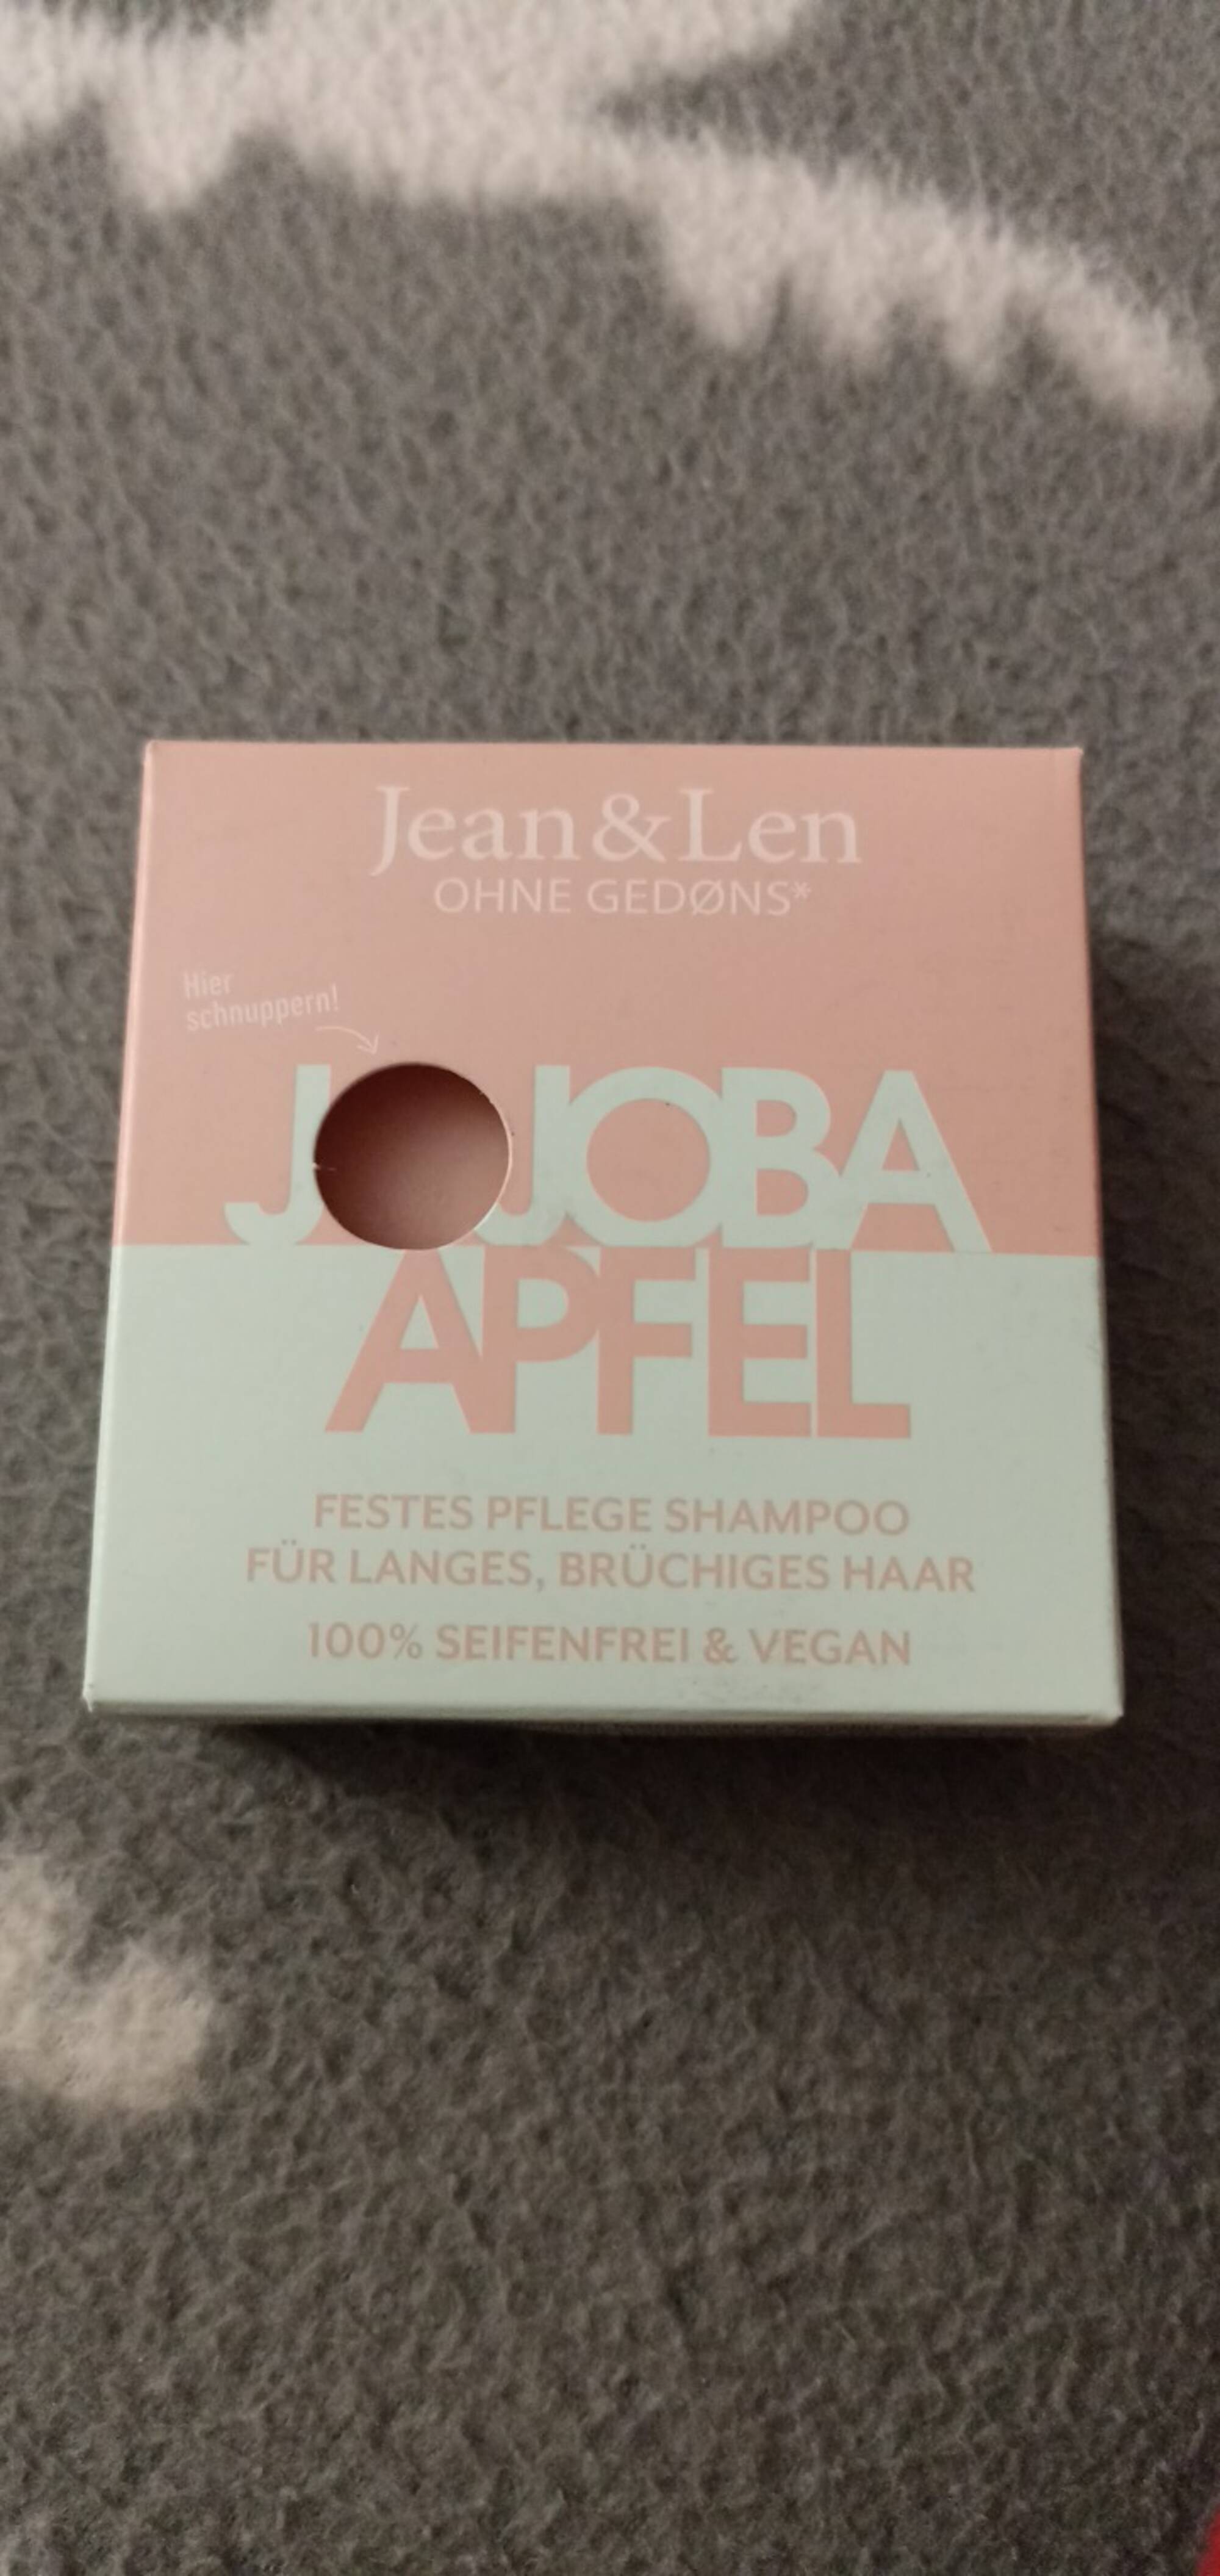 JEAN & LEN - jojoba apfel: feste pflege shampoo